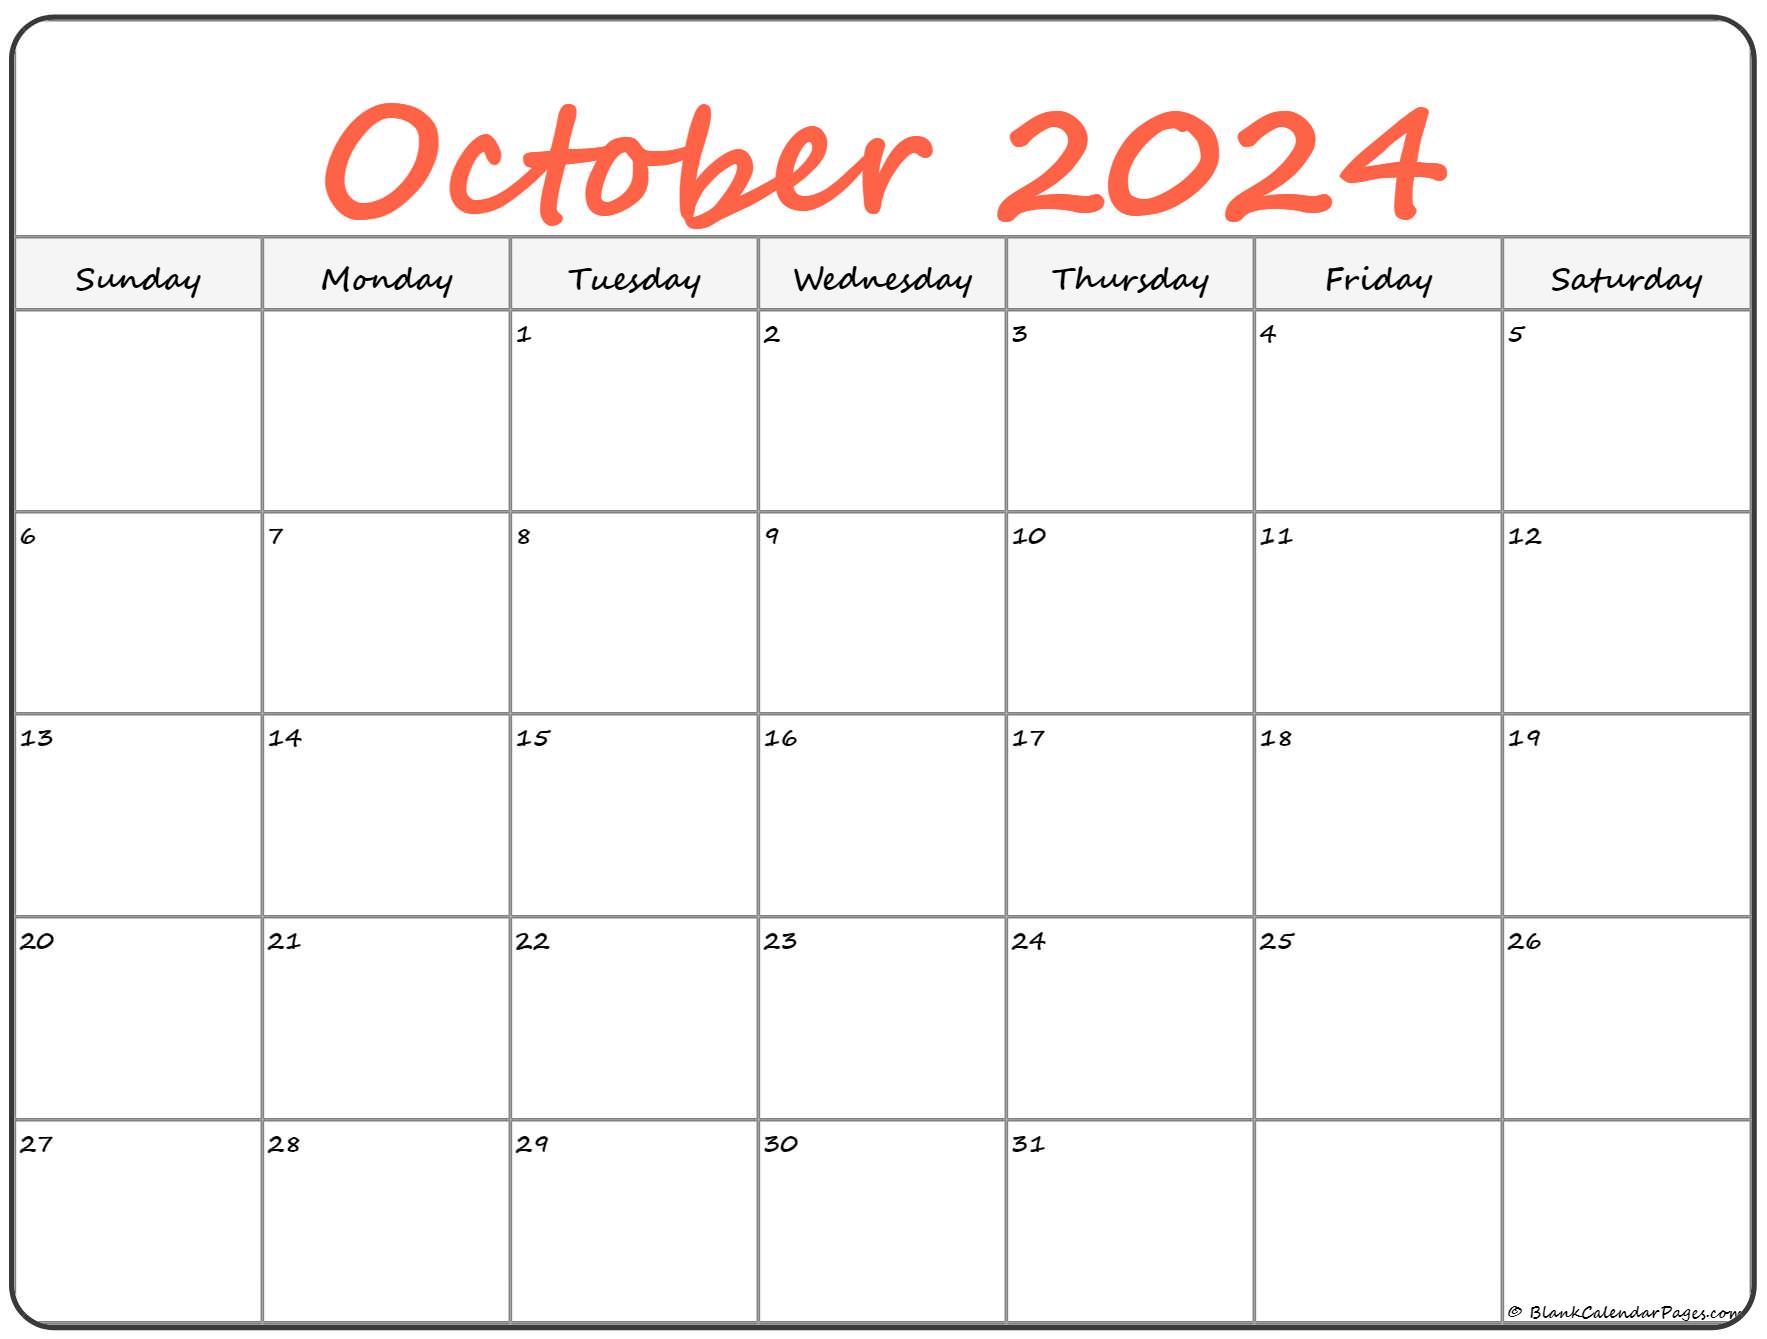 Free Printable Calendar October 2022 October 2022 Calendar | Free Printable Calendar Templates